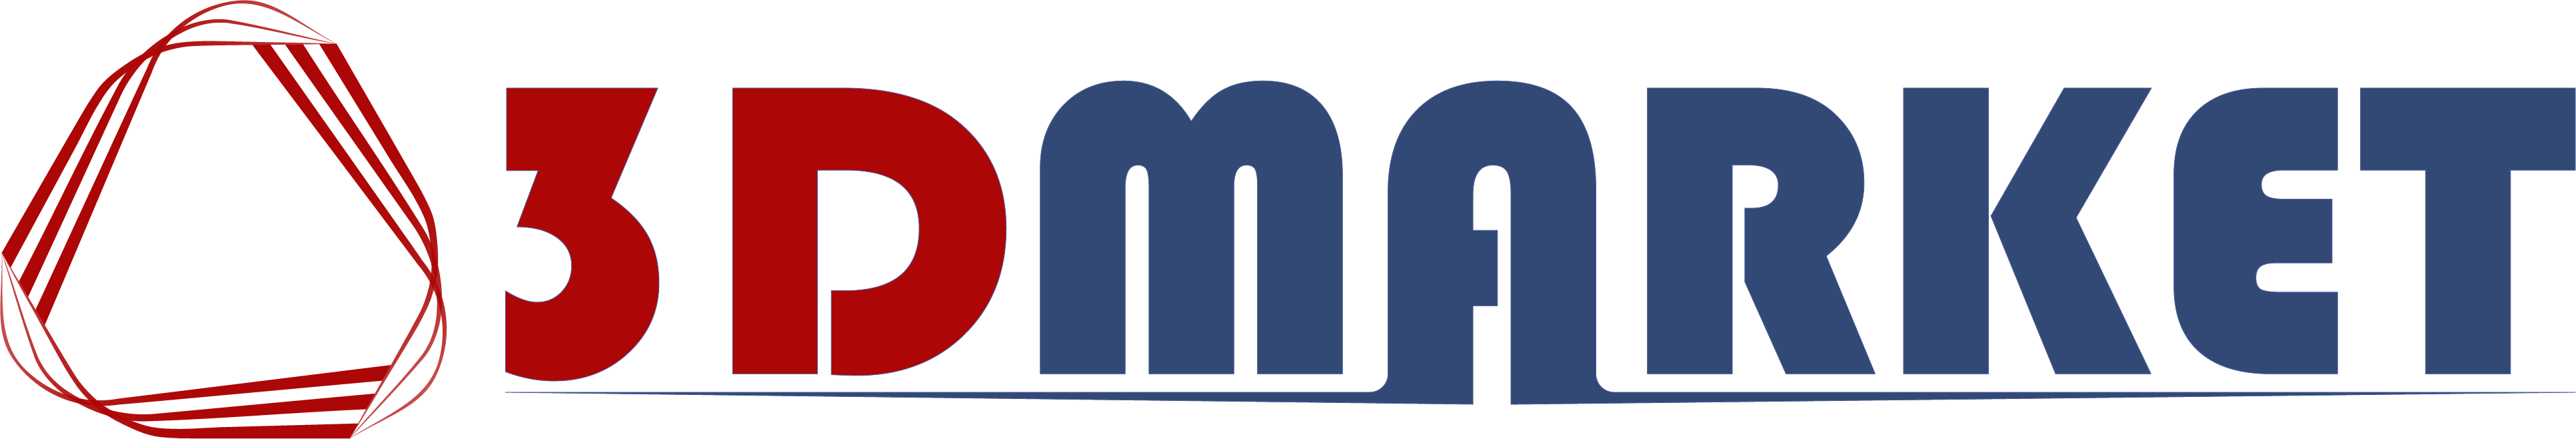 3DMarket logo